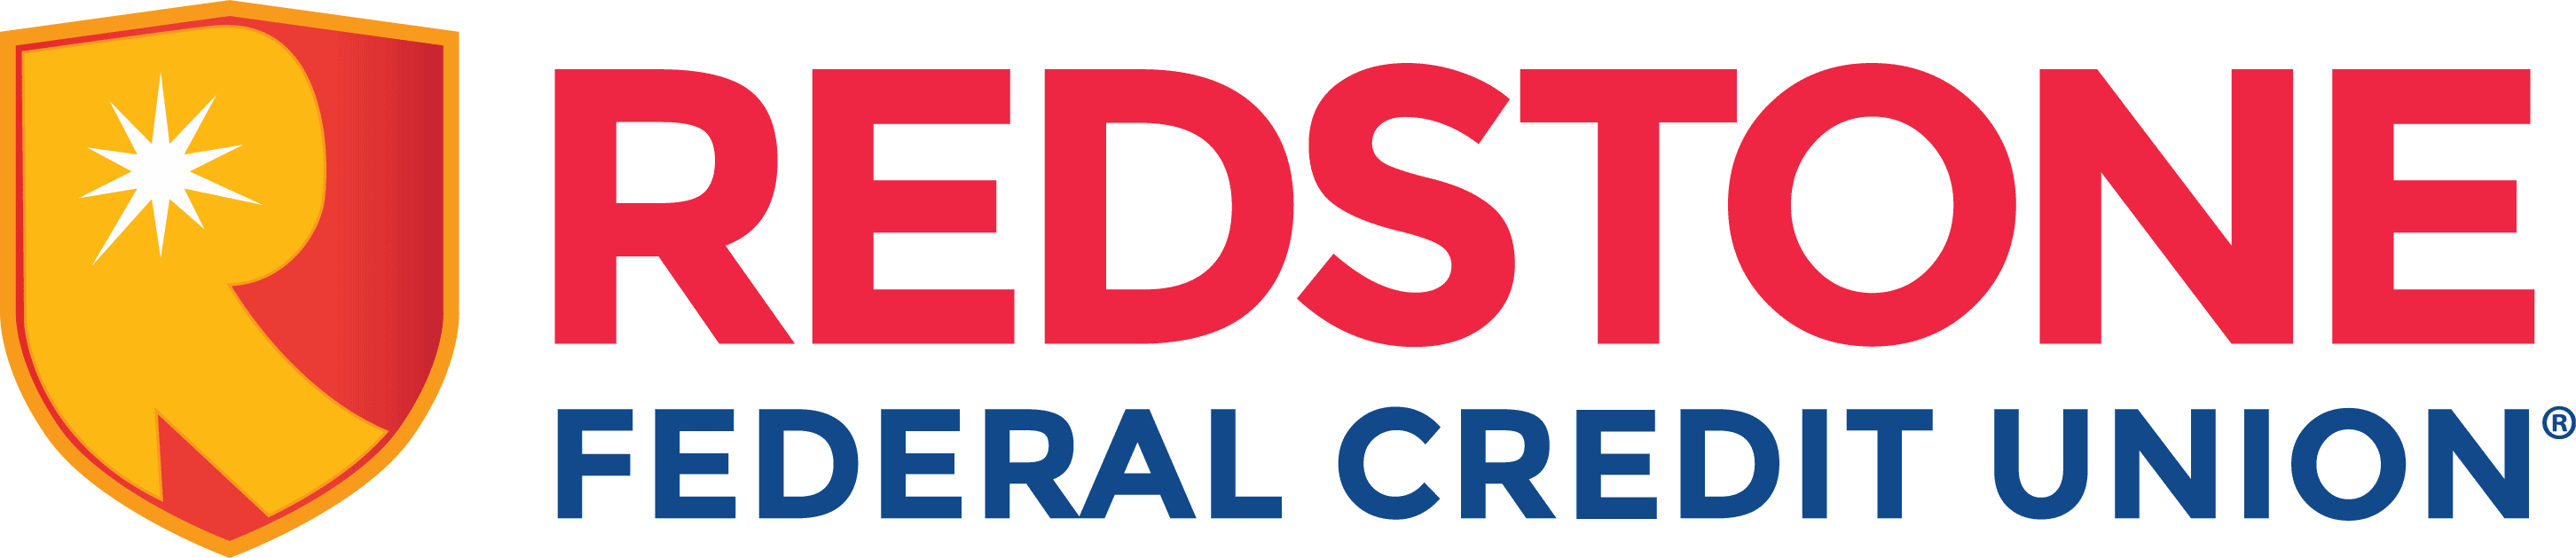 redstone federal credit union